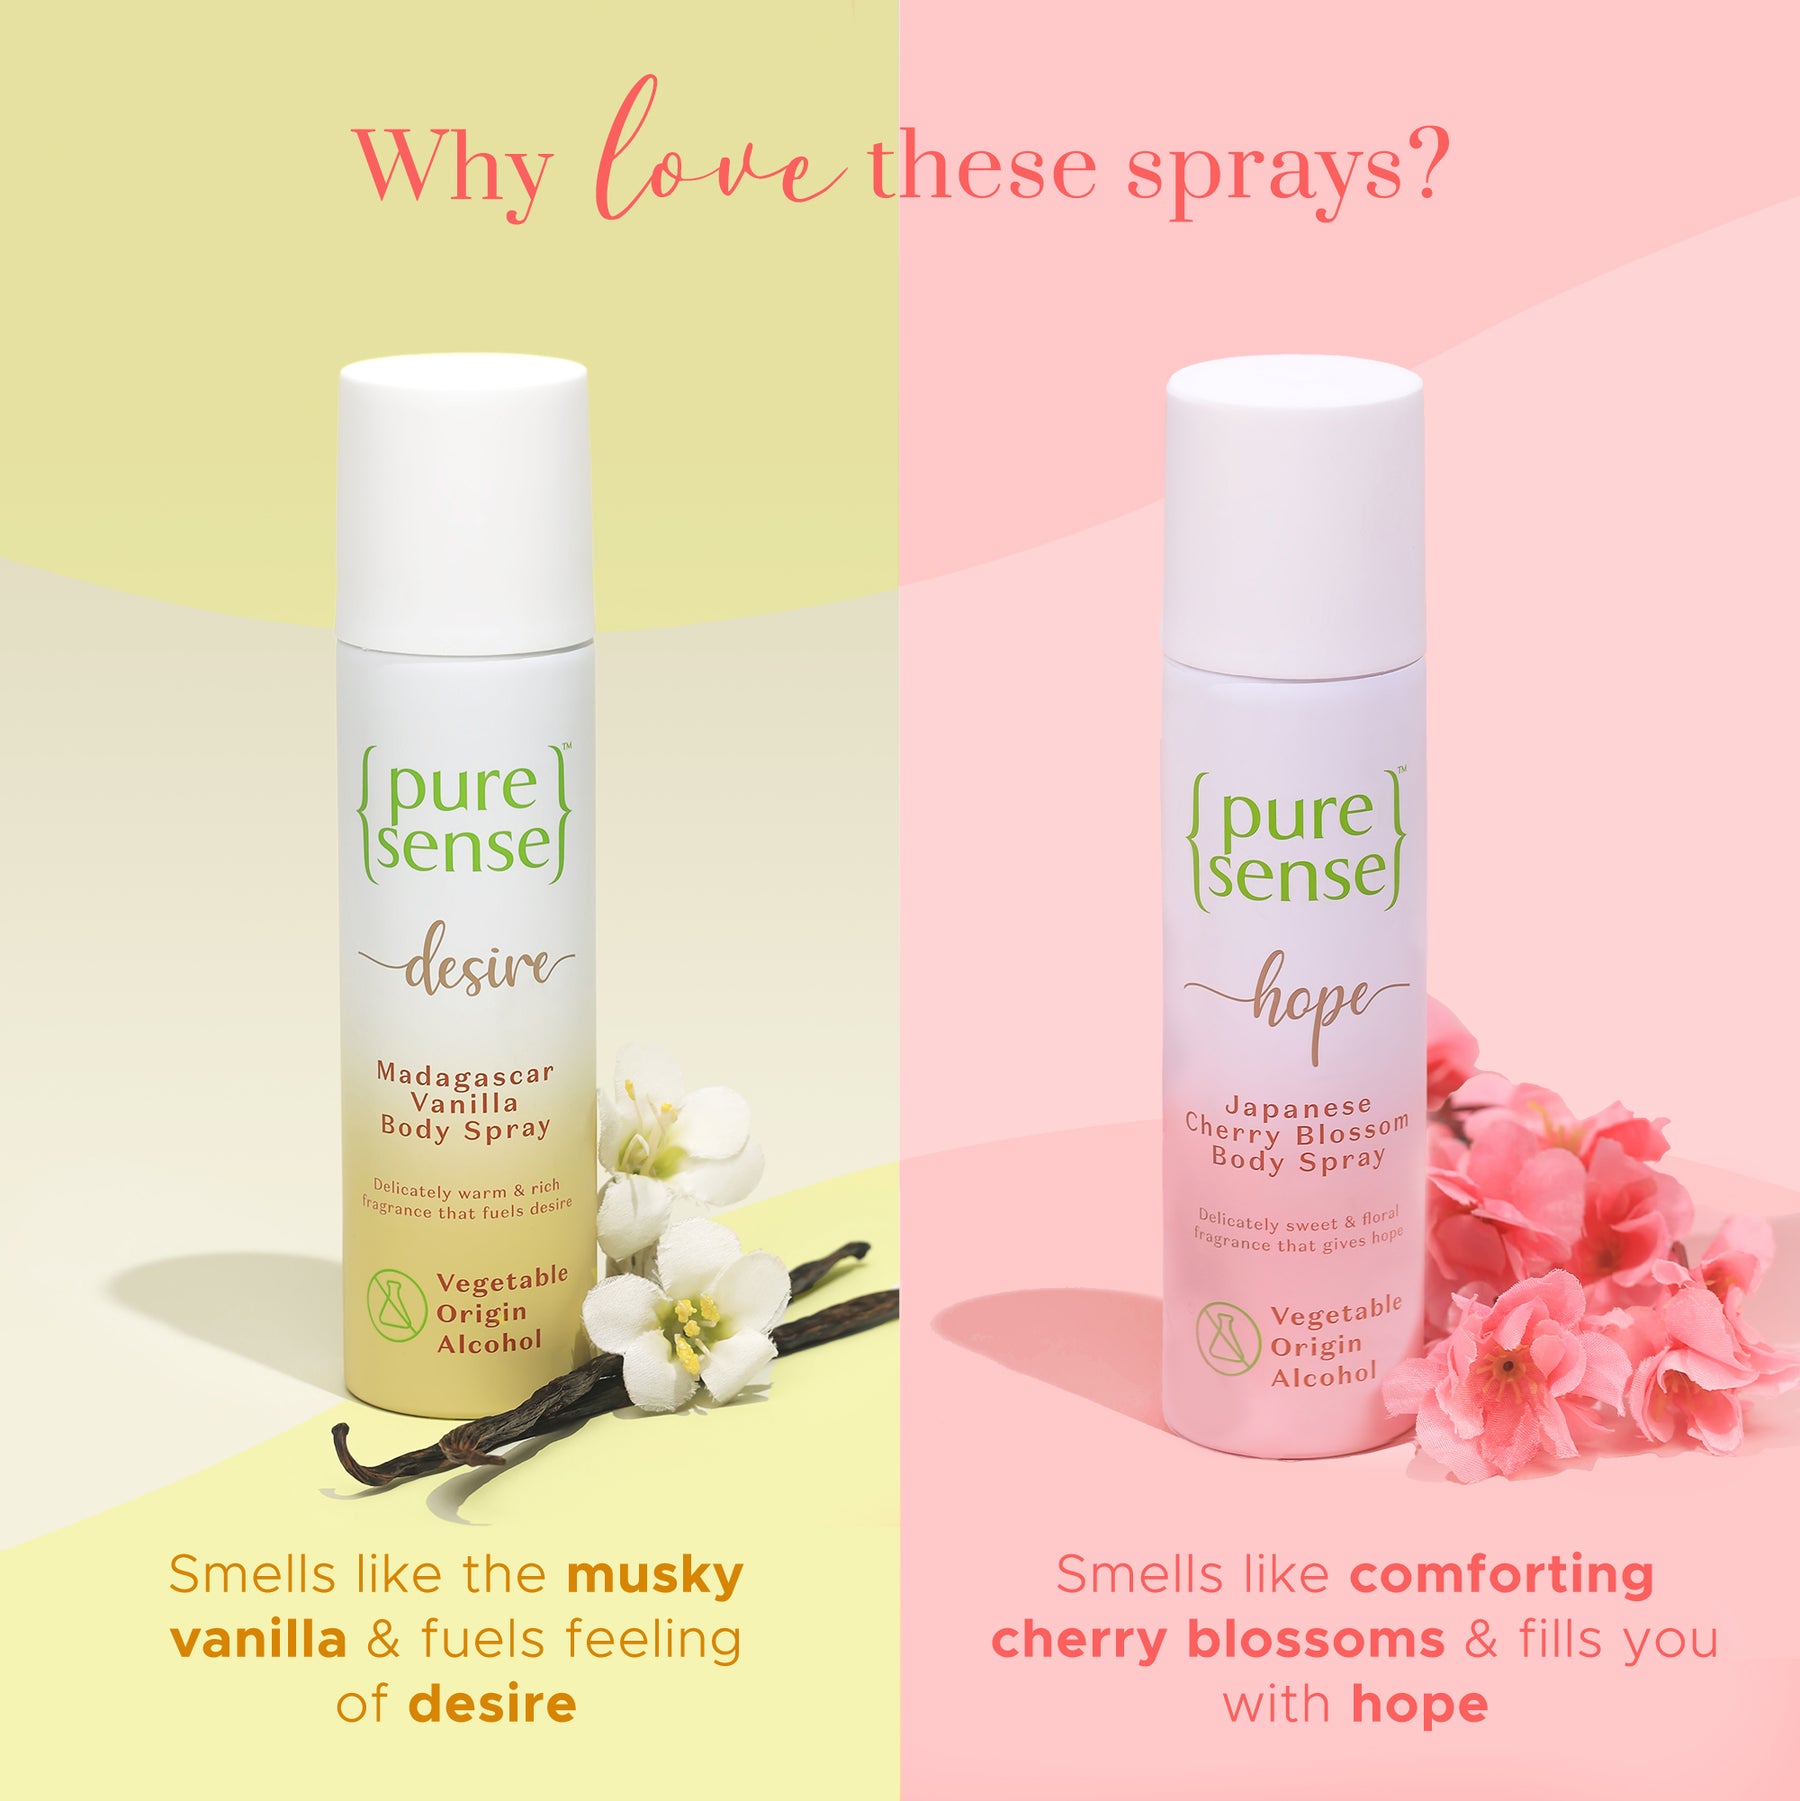 Hope Japanese Cherry Blossom Body Spray & Desire Madagascar Vanilla Body Spray | From the makers of Parachute Advansed | 300ml - PureSense